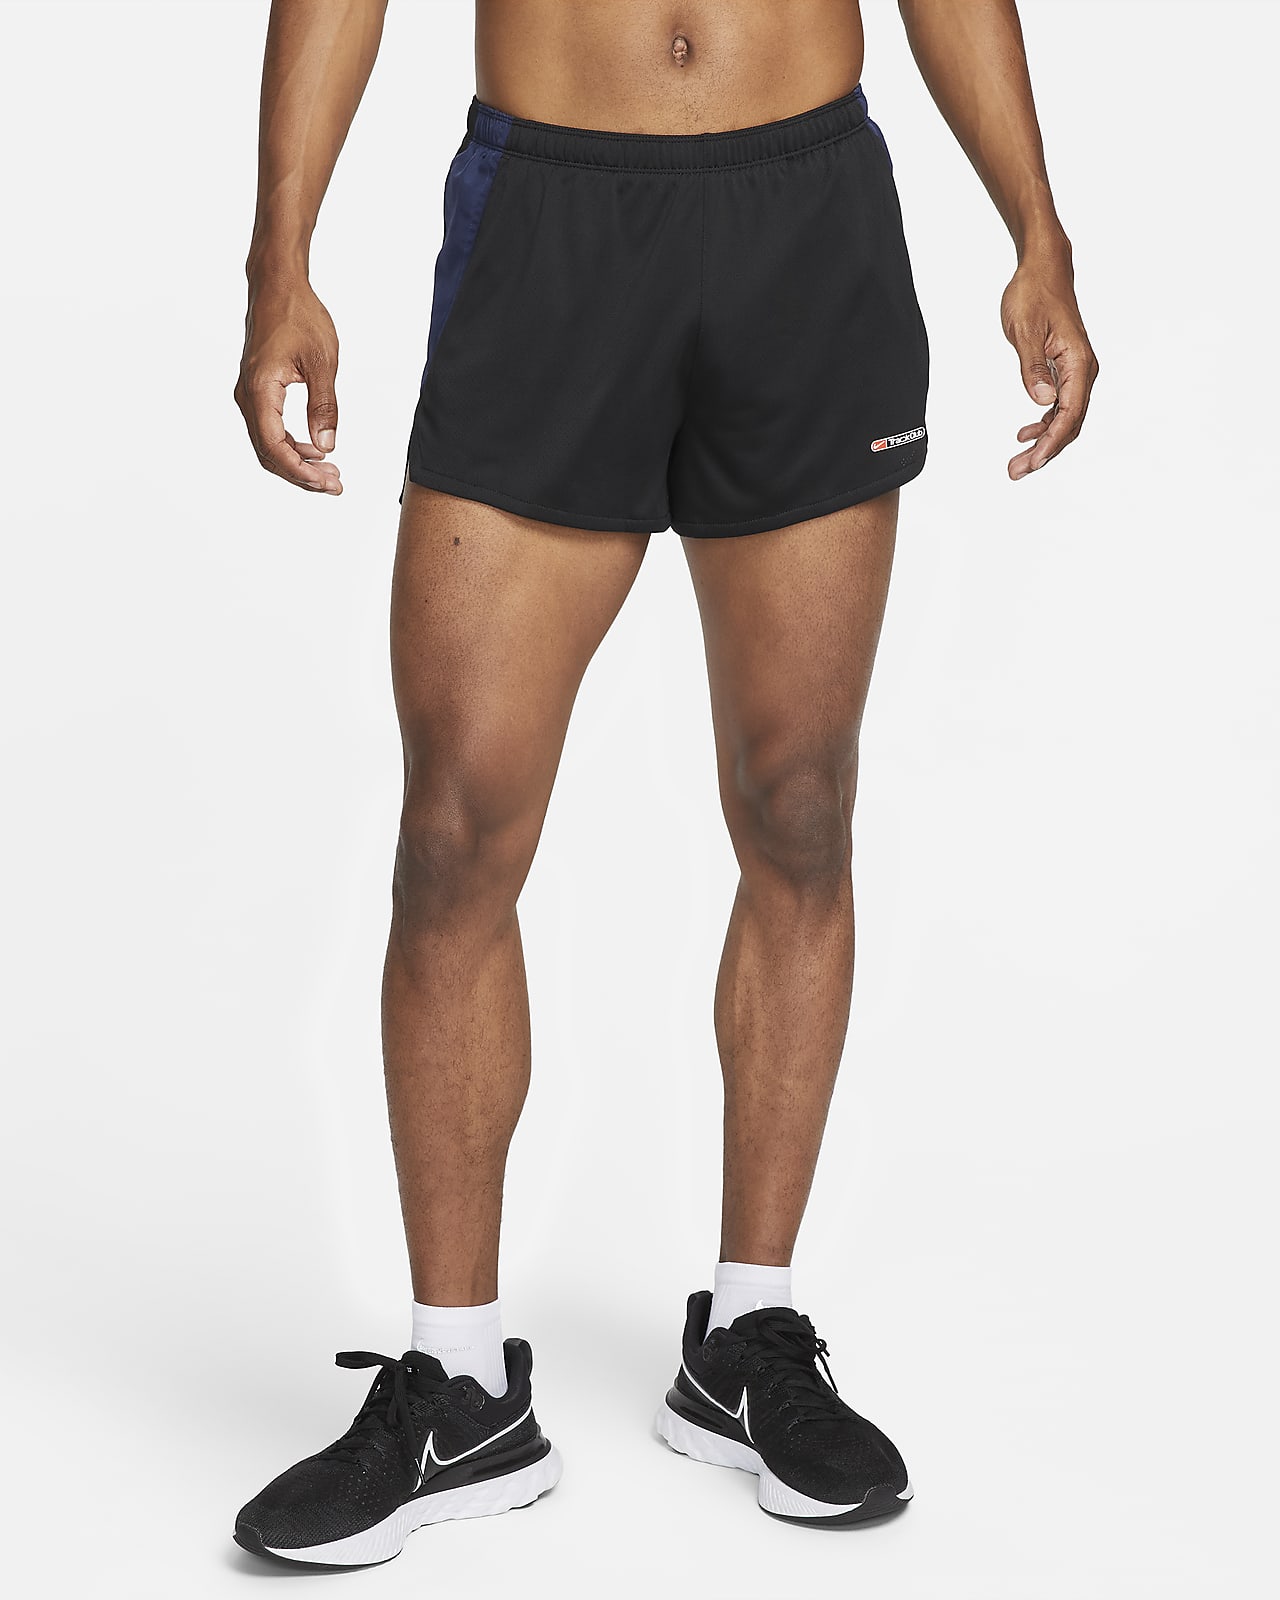 Nike Mens Everyday Cotton Trunks 3 Pack Black XL